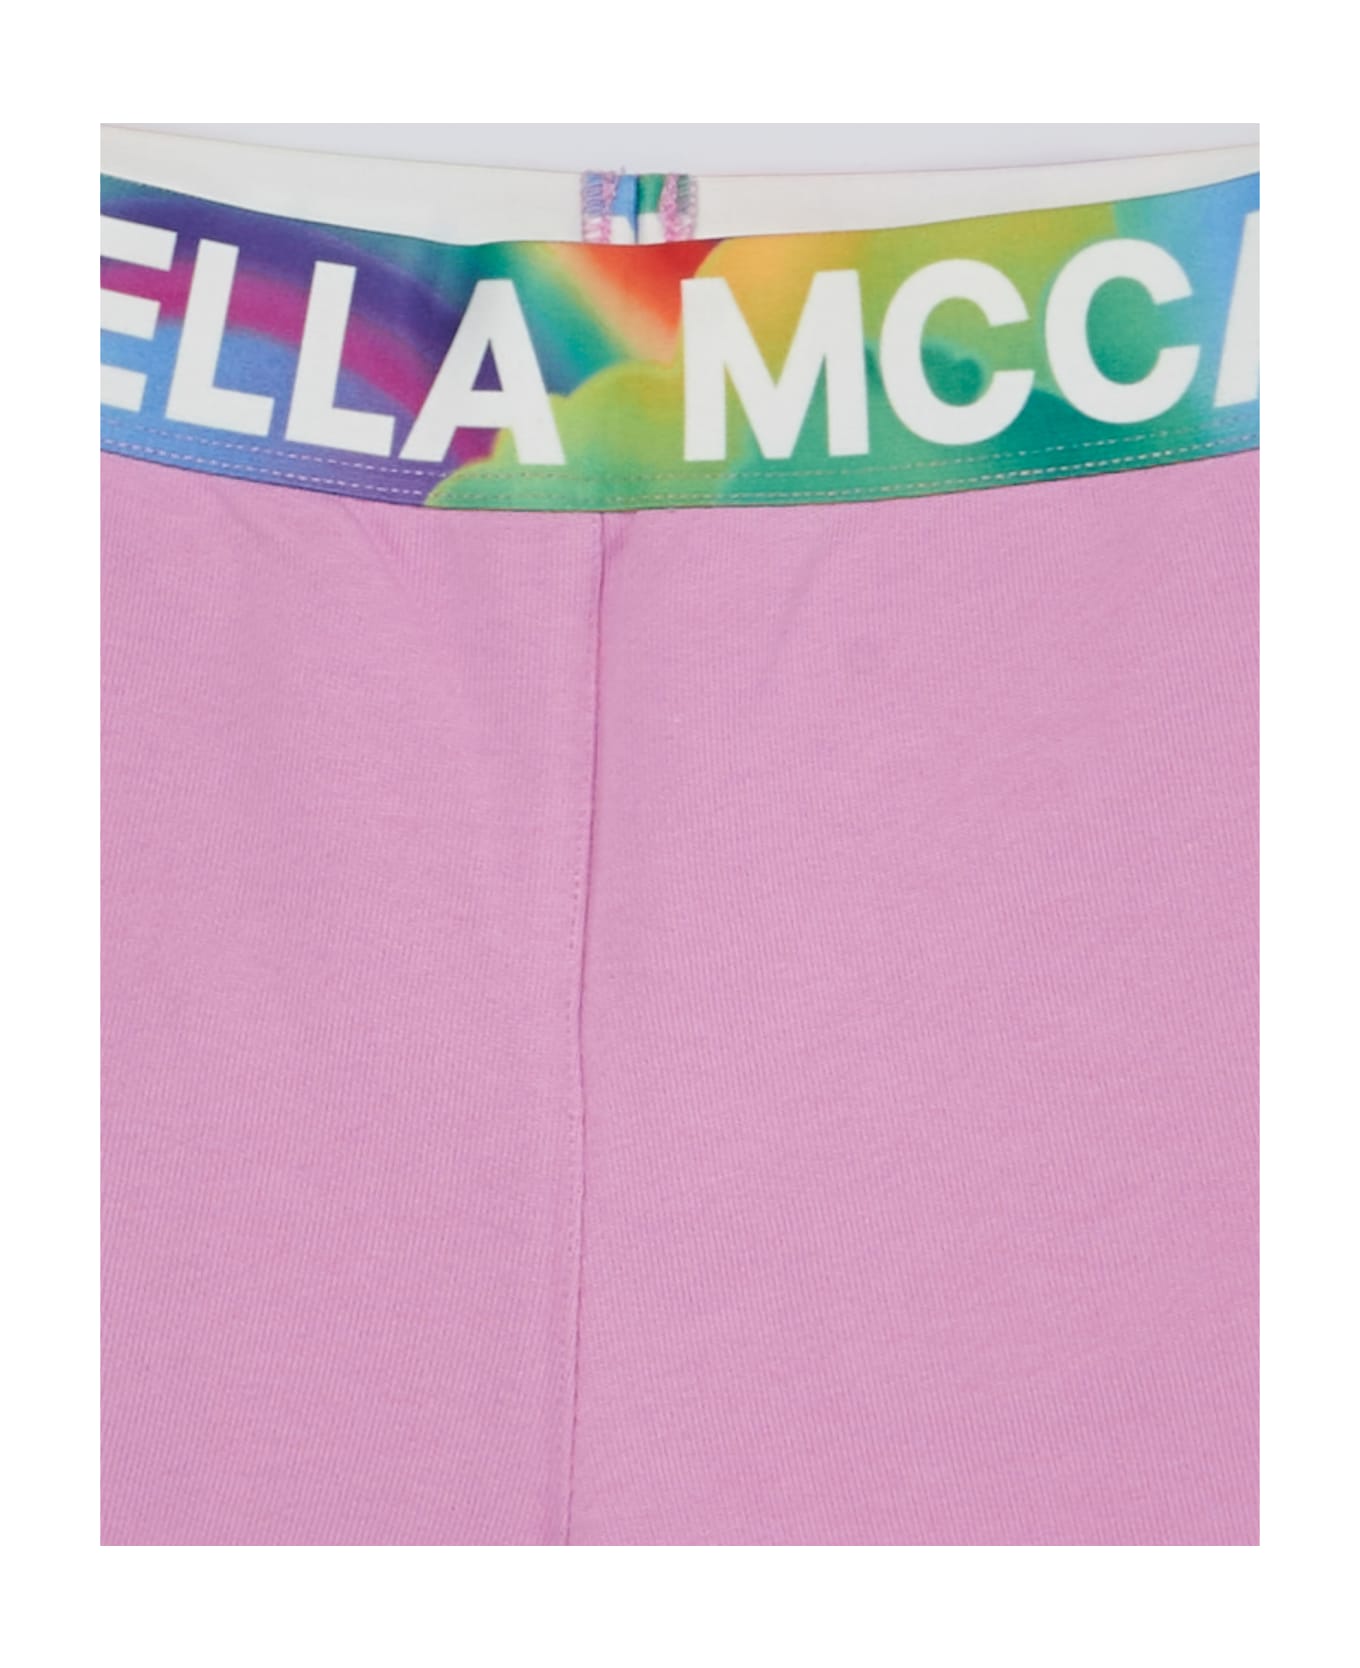 Stella McCartney Shorts Shorts - ROSA